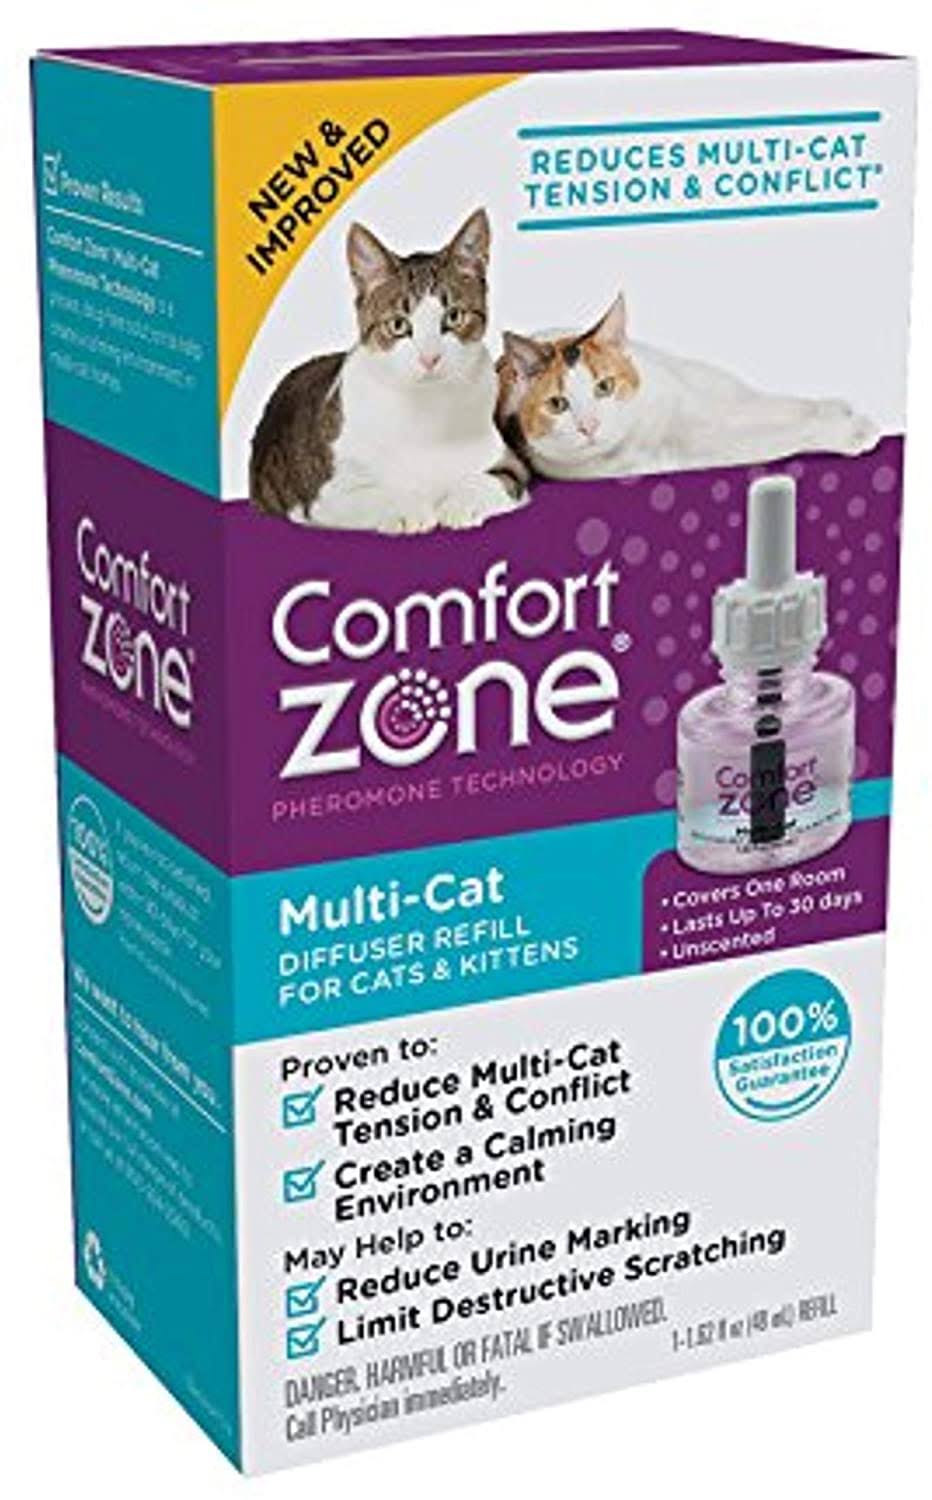 Comfort Zone Multi-Cat Diffuser Refill for Cats & Kittens